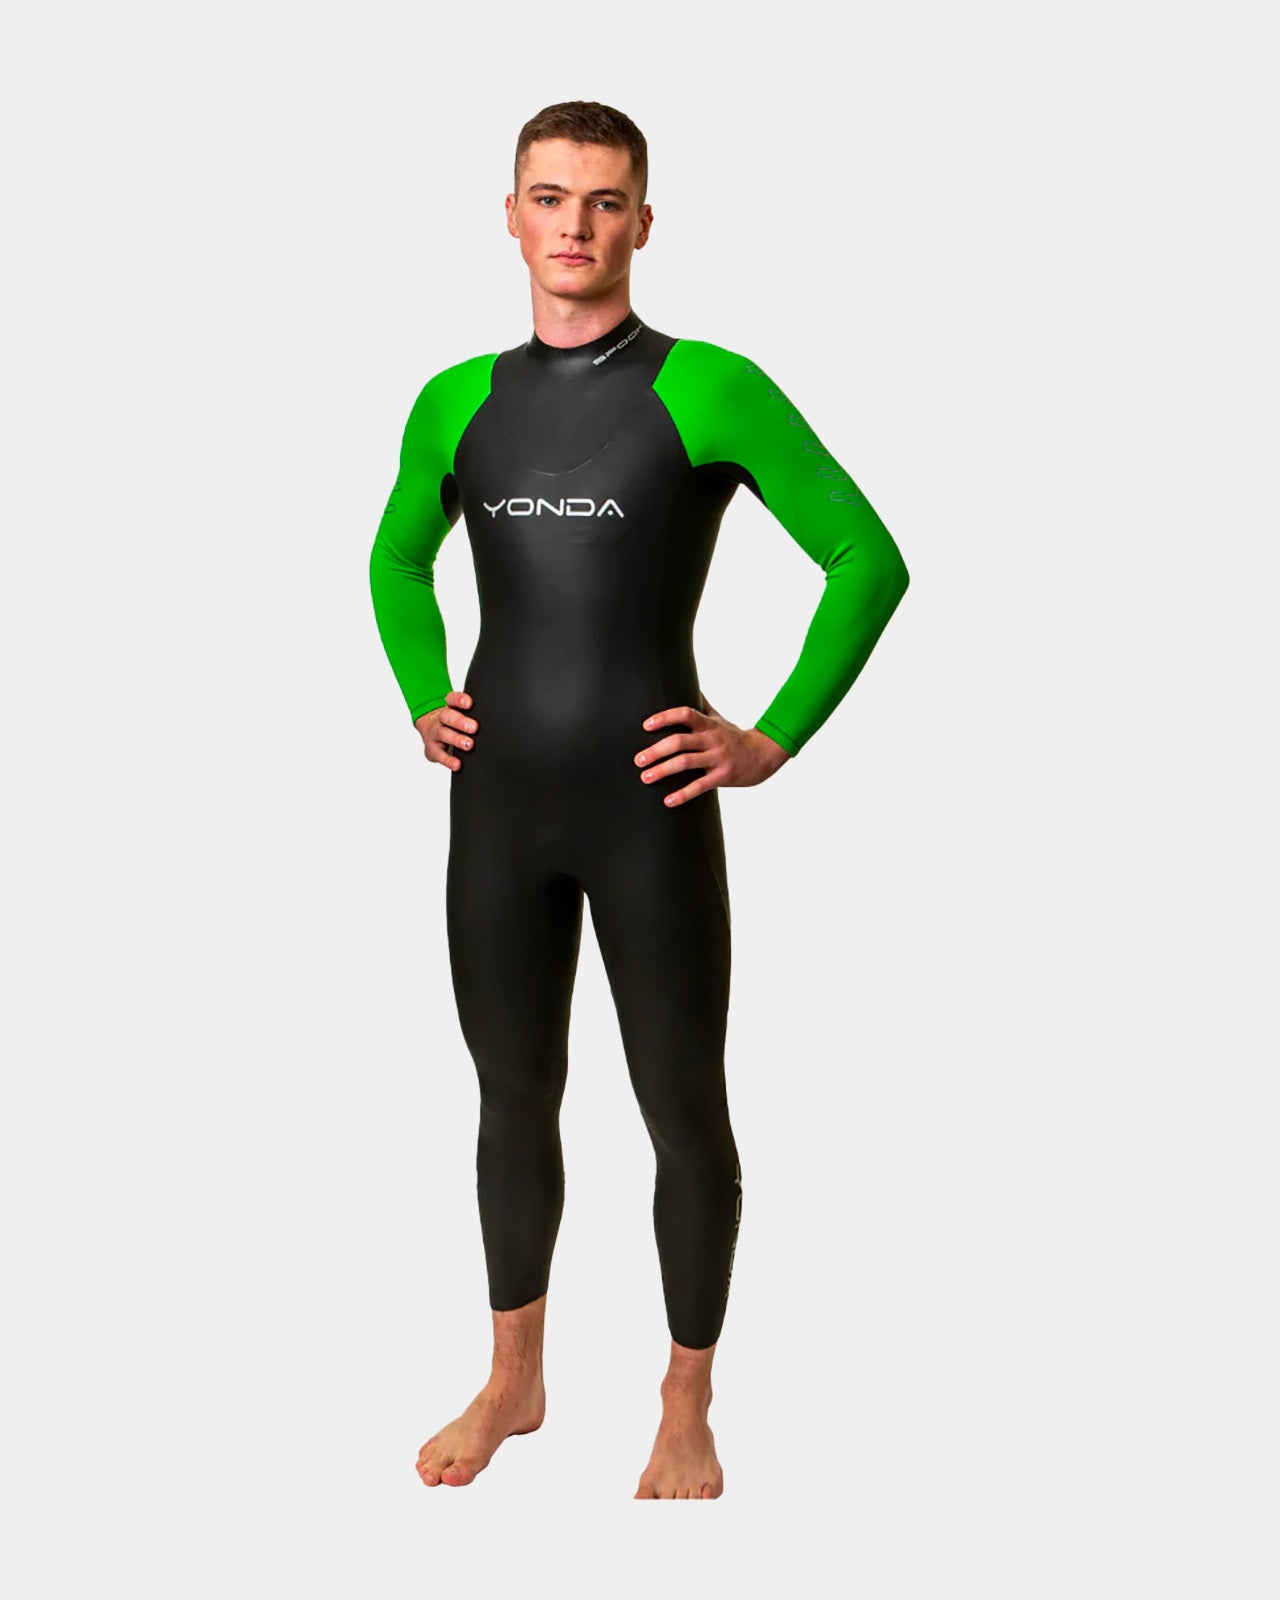 Yonda Spook Men's Triathlon & Swimming Wetsuit